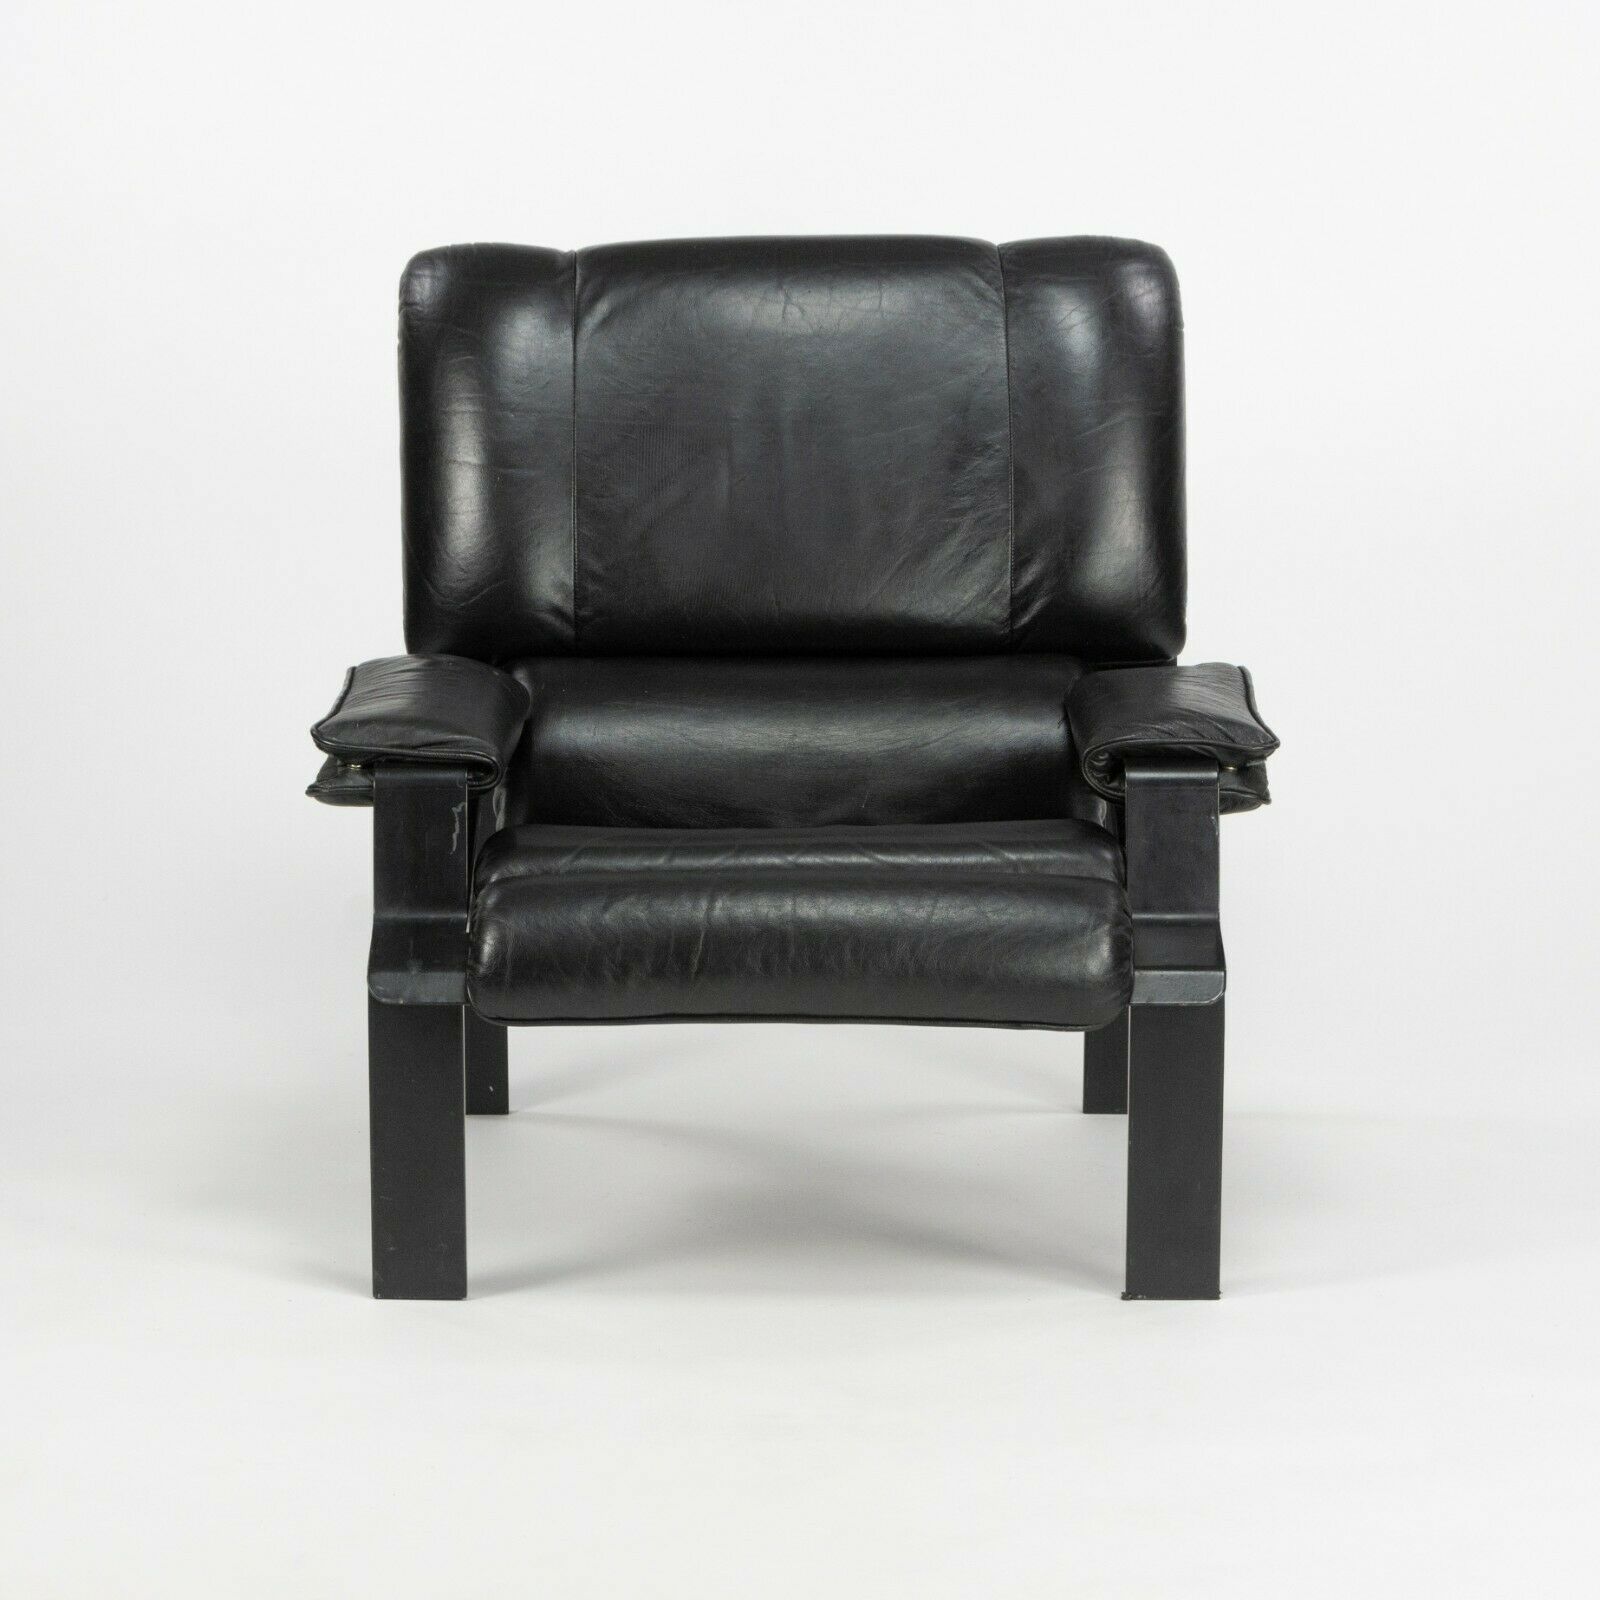 1964 Joe Colombo for Bieffeplast LEM Black Leather Lounge Chair 1x Available